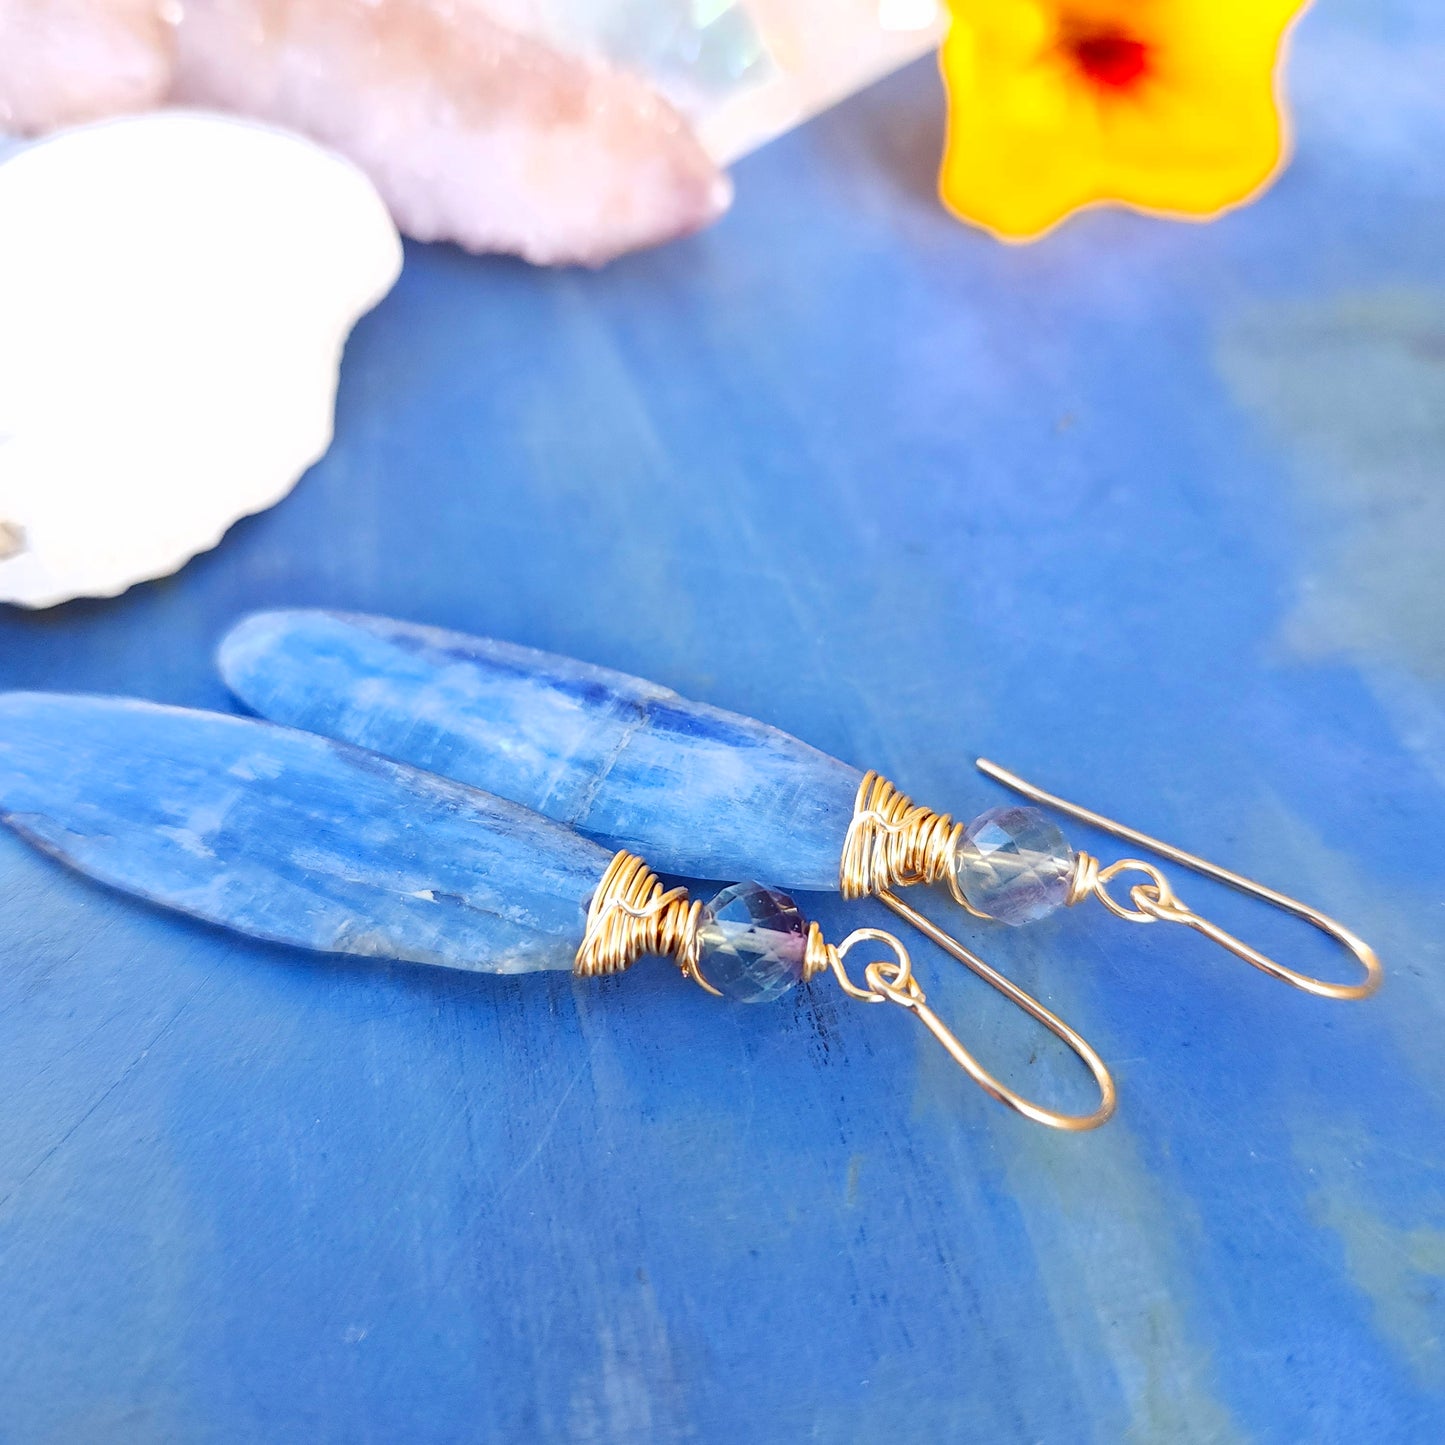 One of a Kind Blue Kyanite and Fluorite Gemstone Earrings